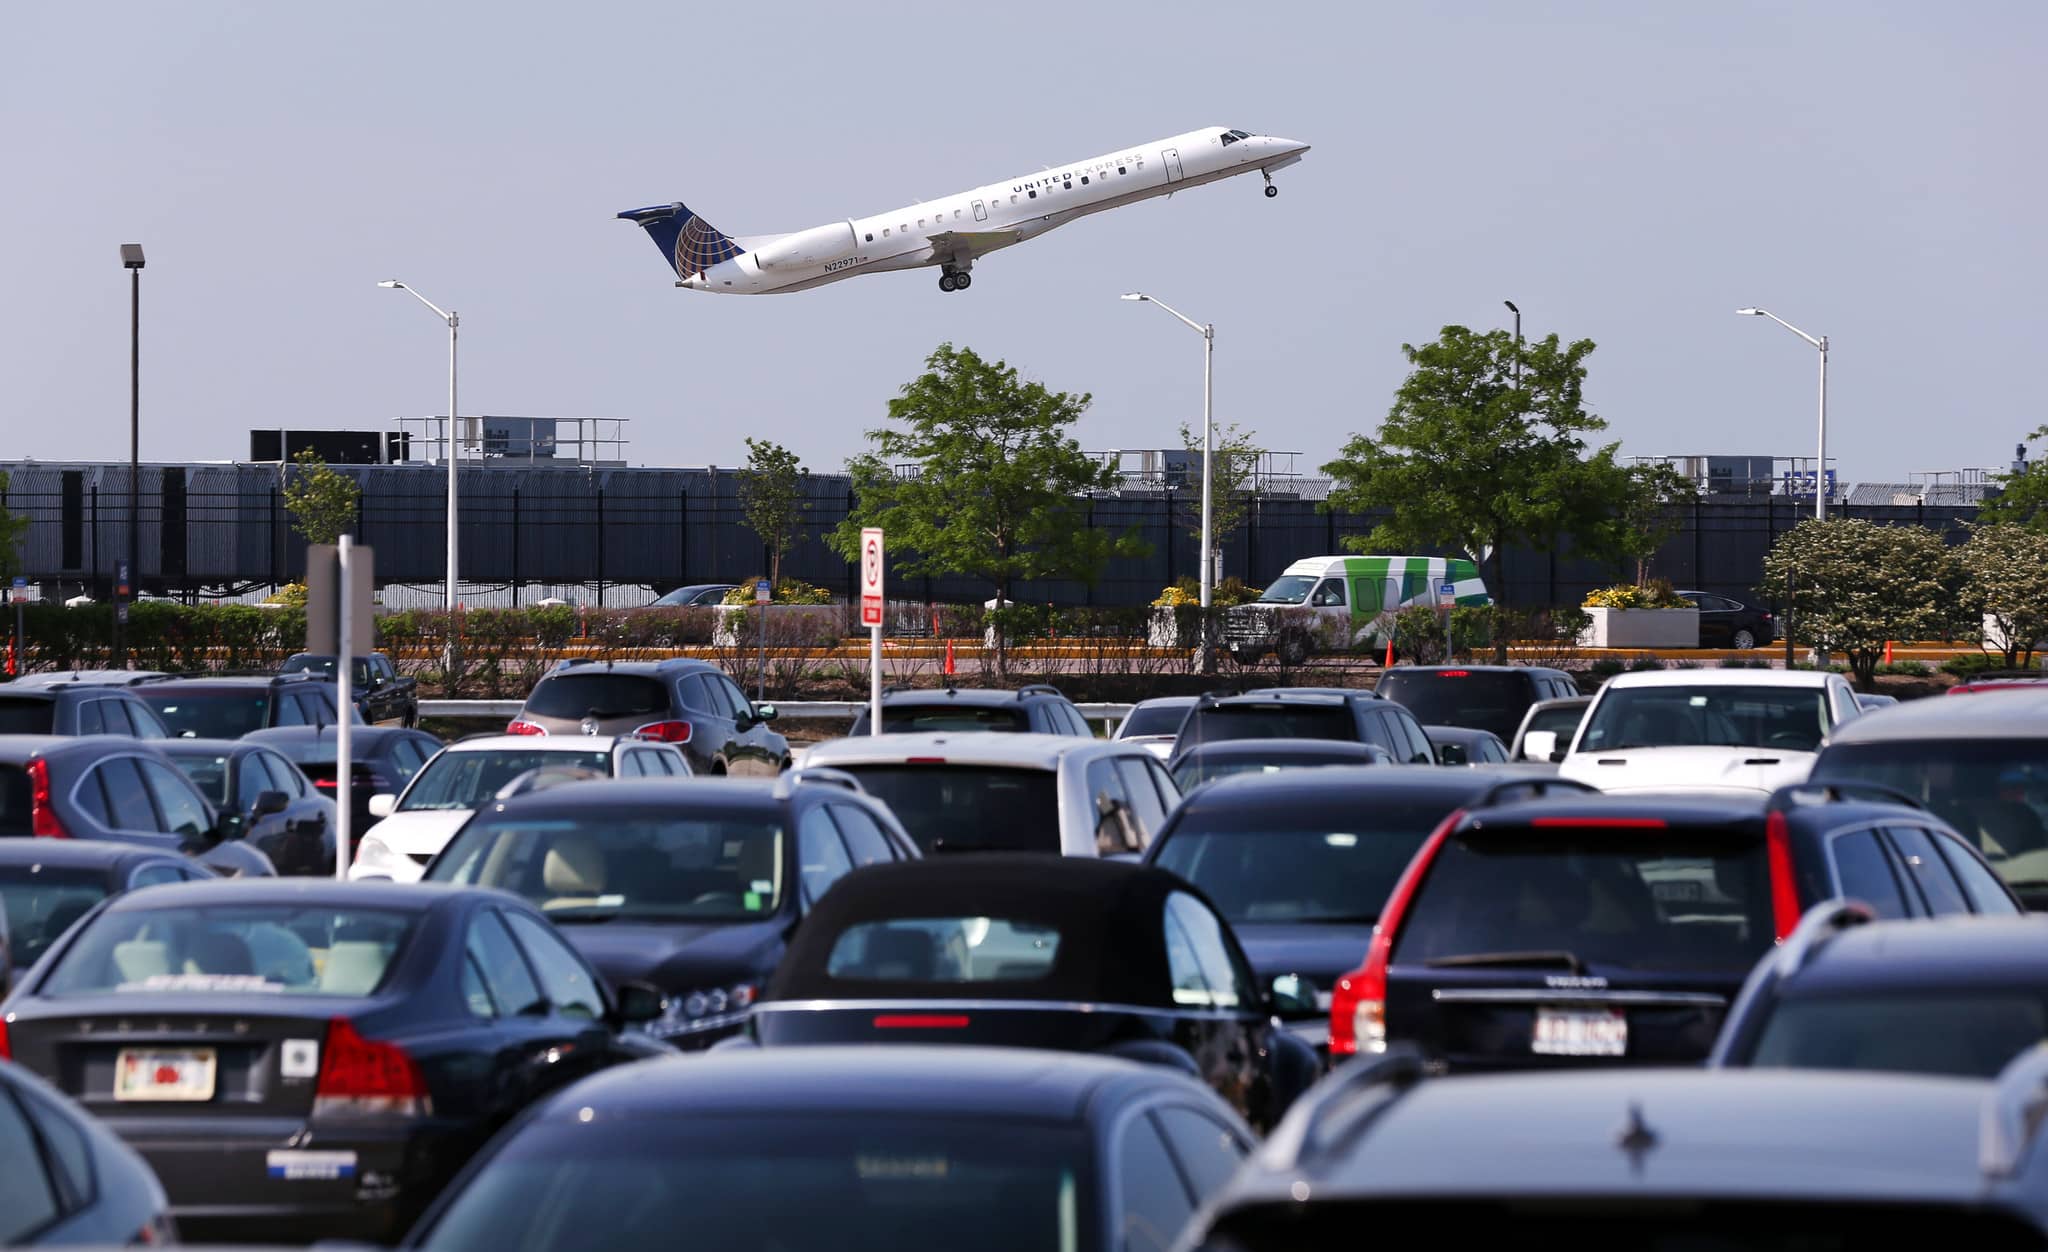 Tech Airport Parking Header Image